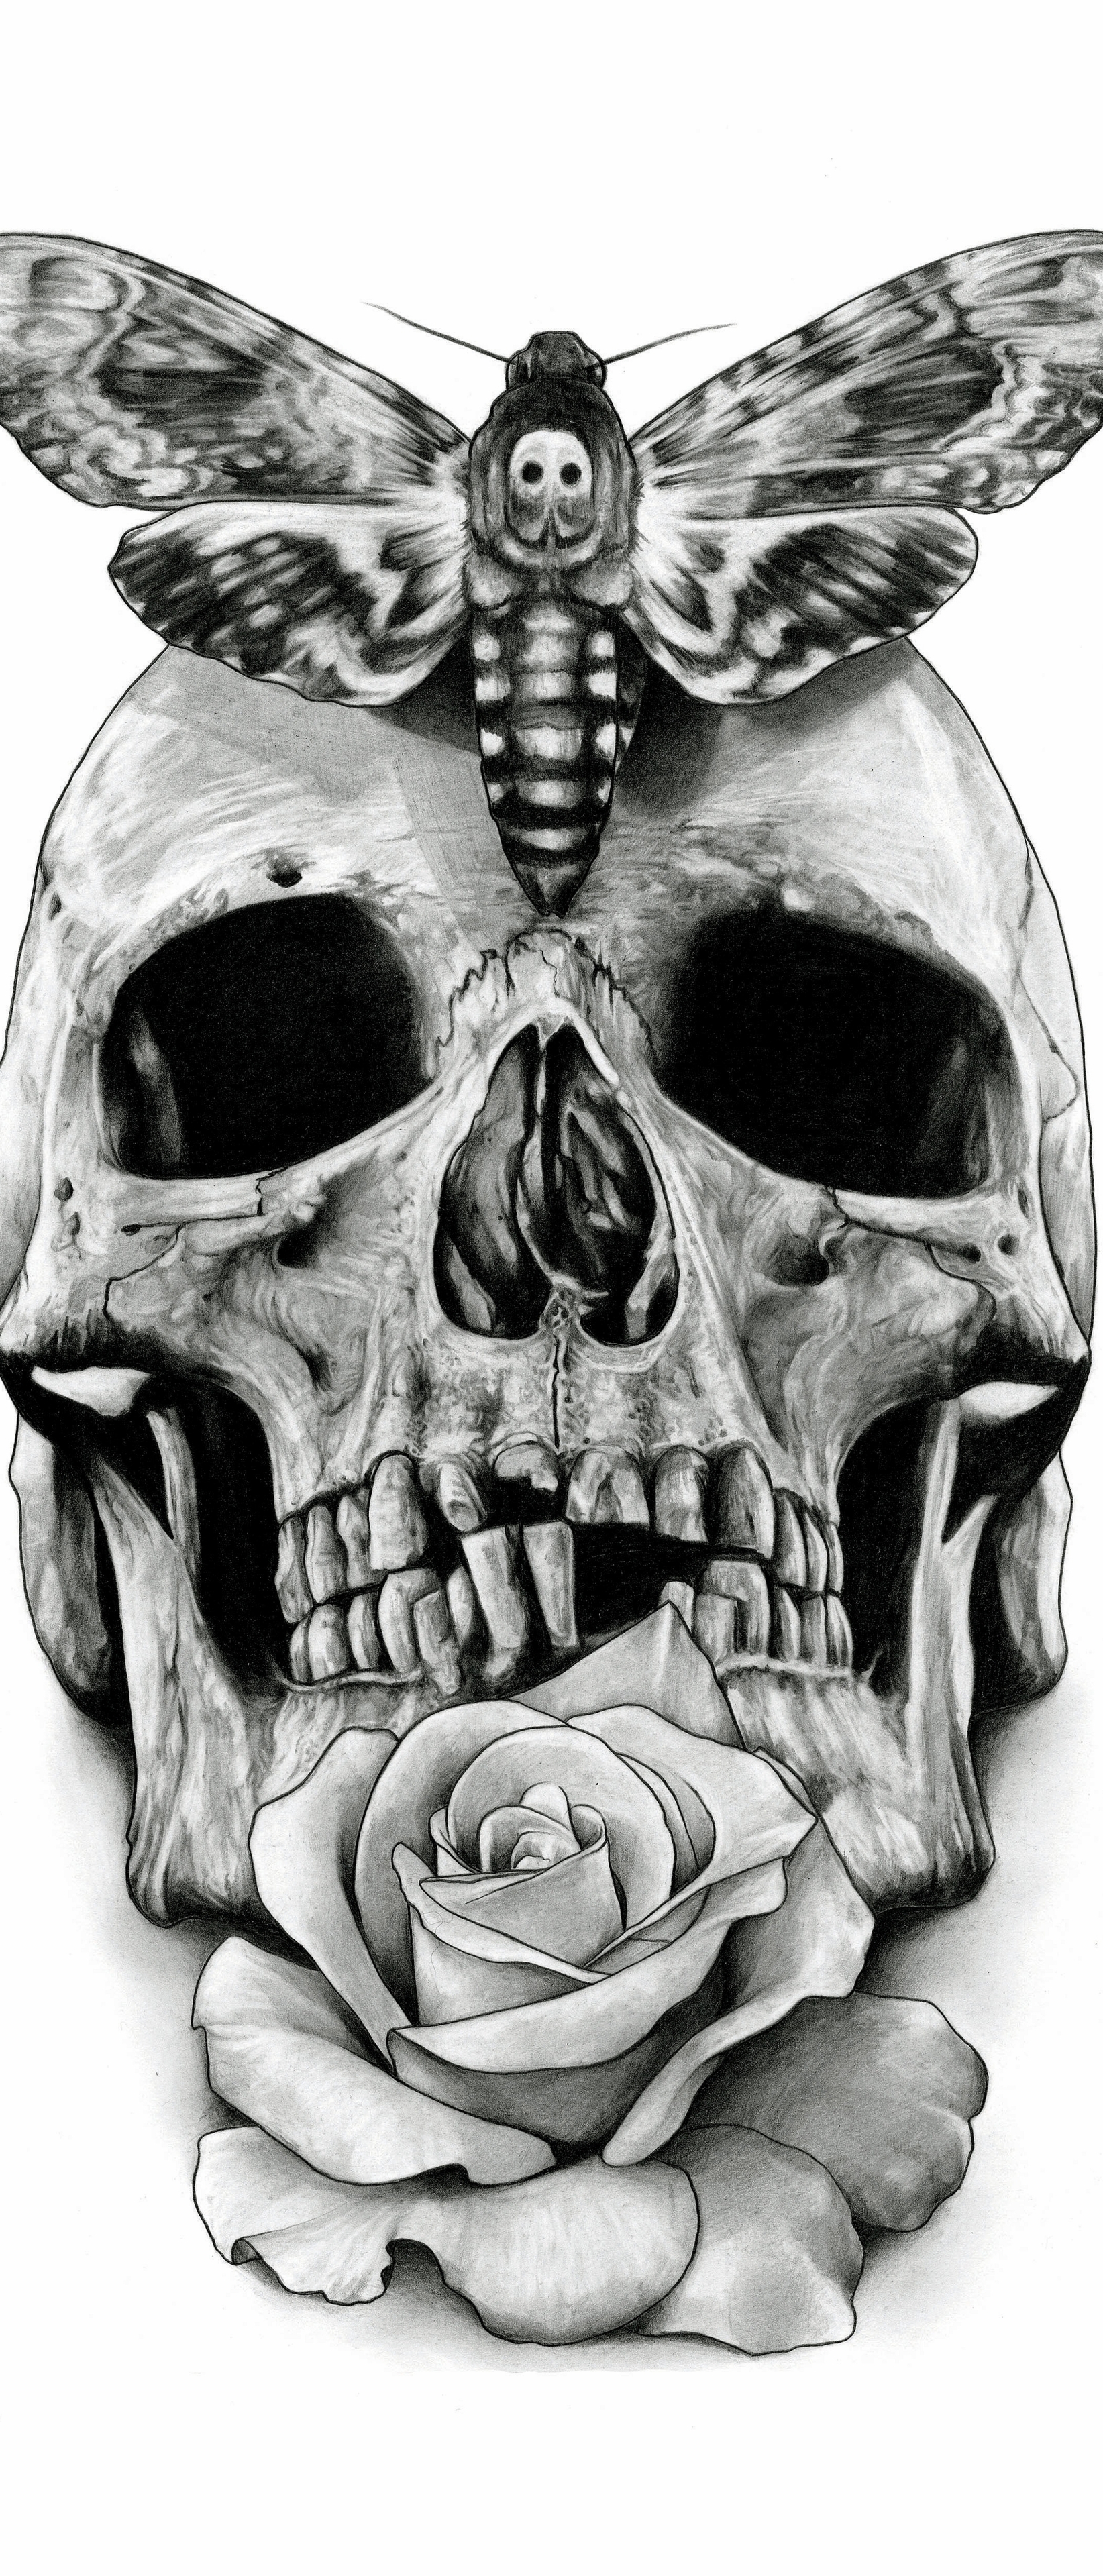 Skull Phone Wallpaper